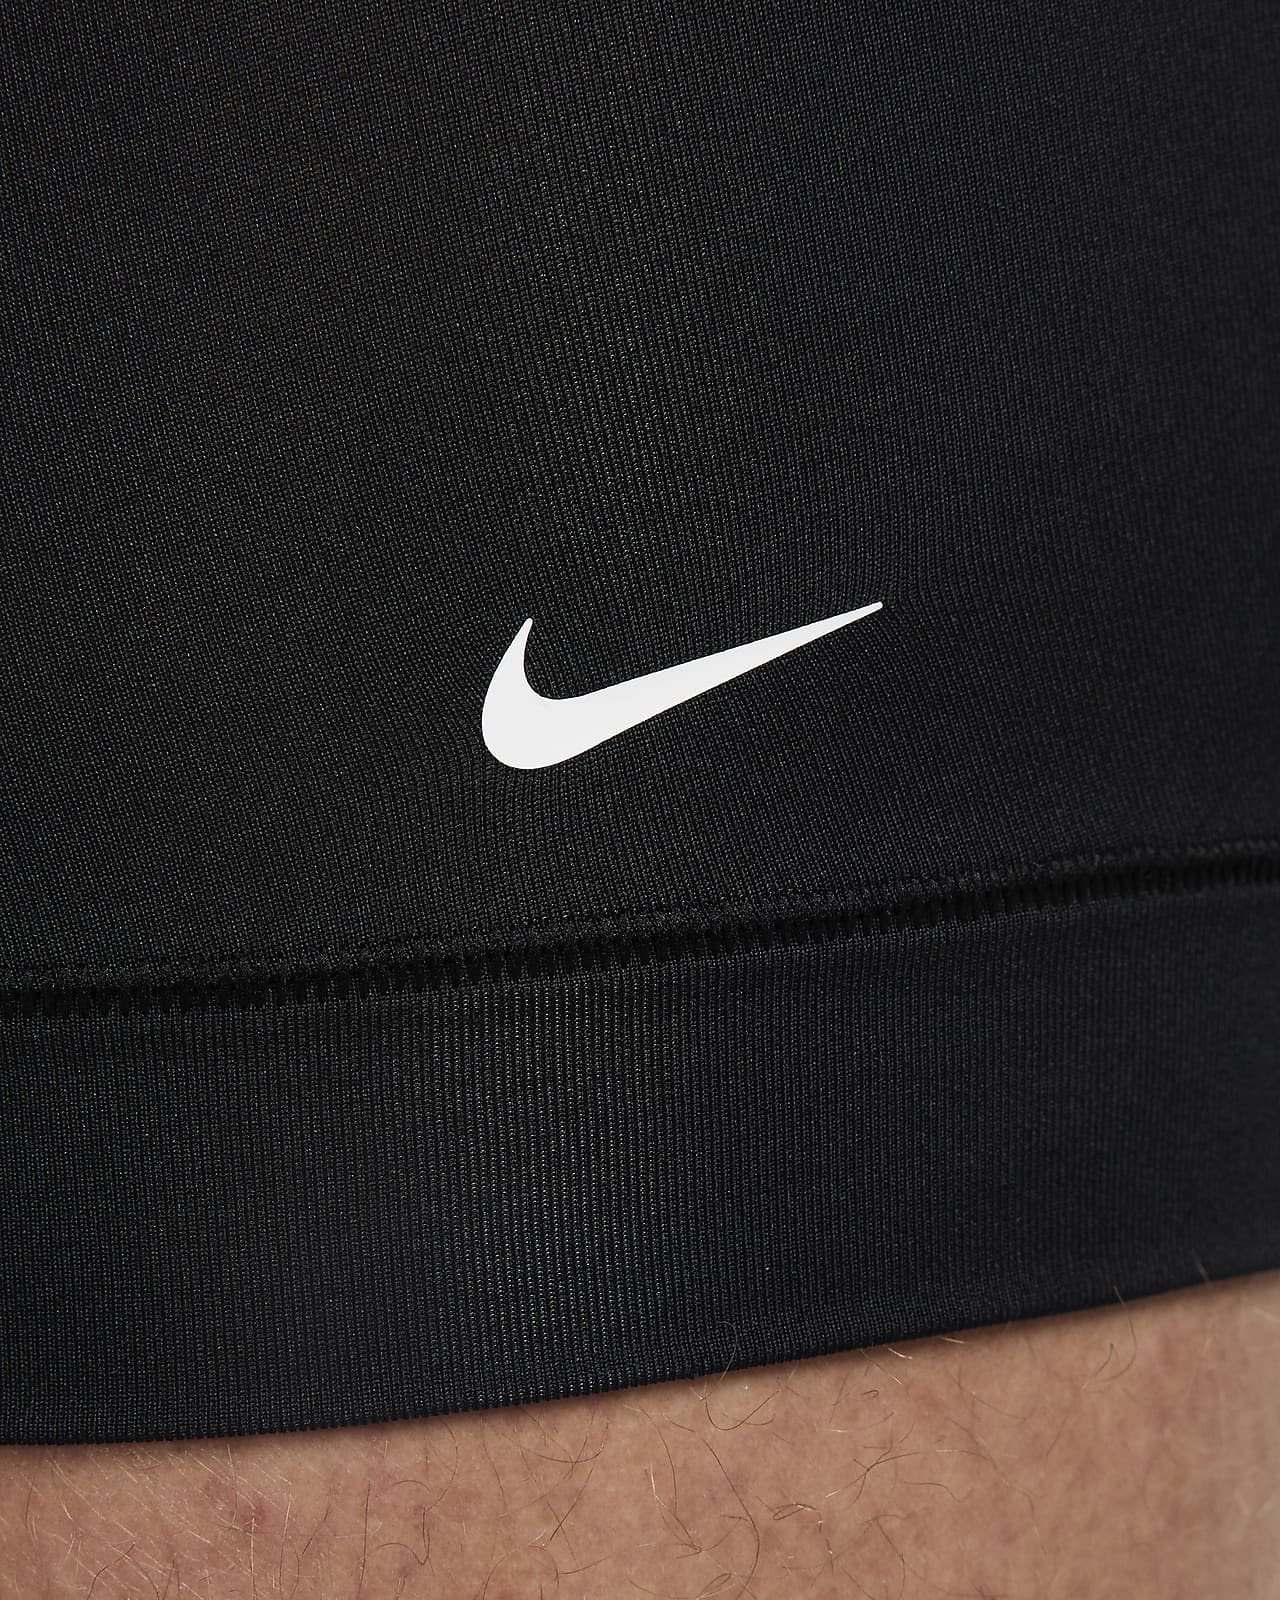 Nike Sngl Boxer Brief Essential Micro Mens Boxer Briefs Size Xl, Color:  Grey/White/Black